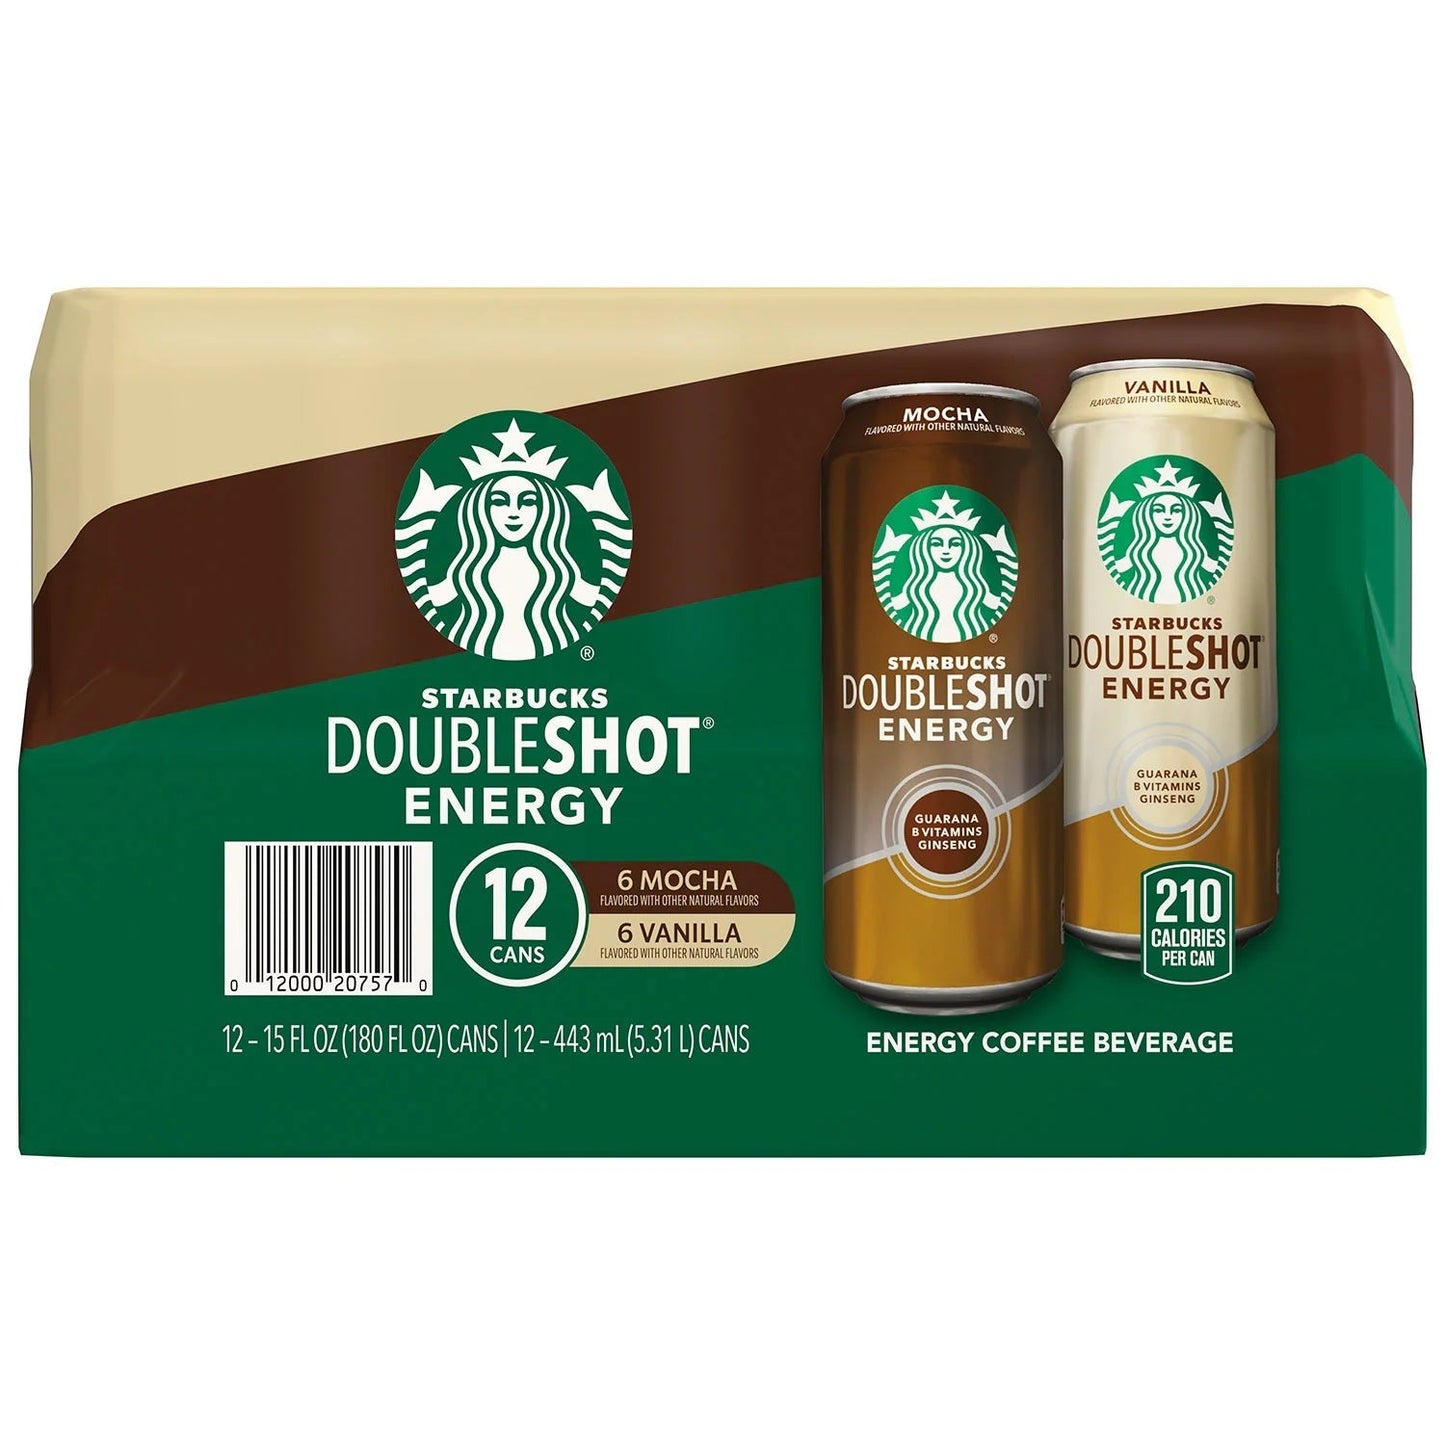 Starbuck's Doubleshot Energy, Mocha and Vanilla Variety Pack -15oz/12pk